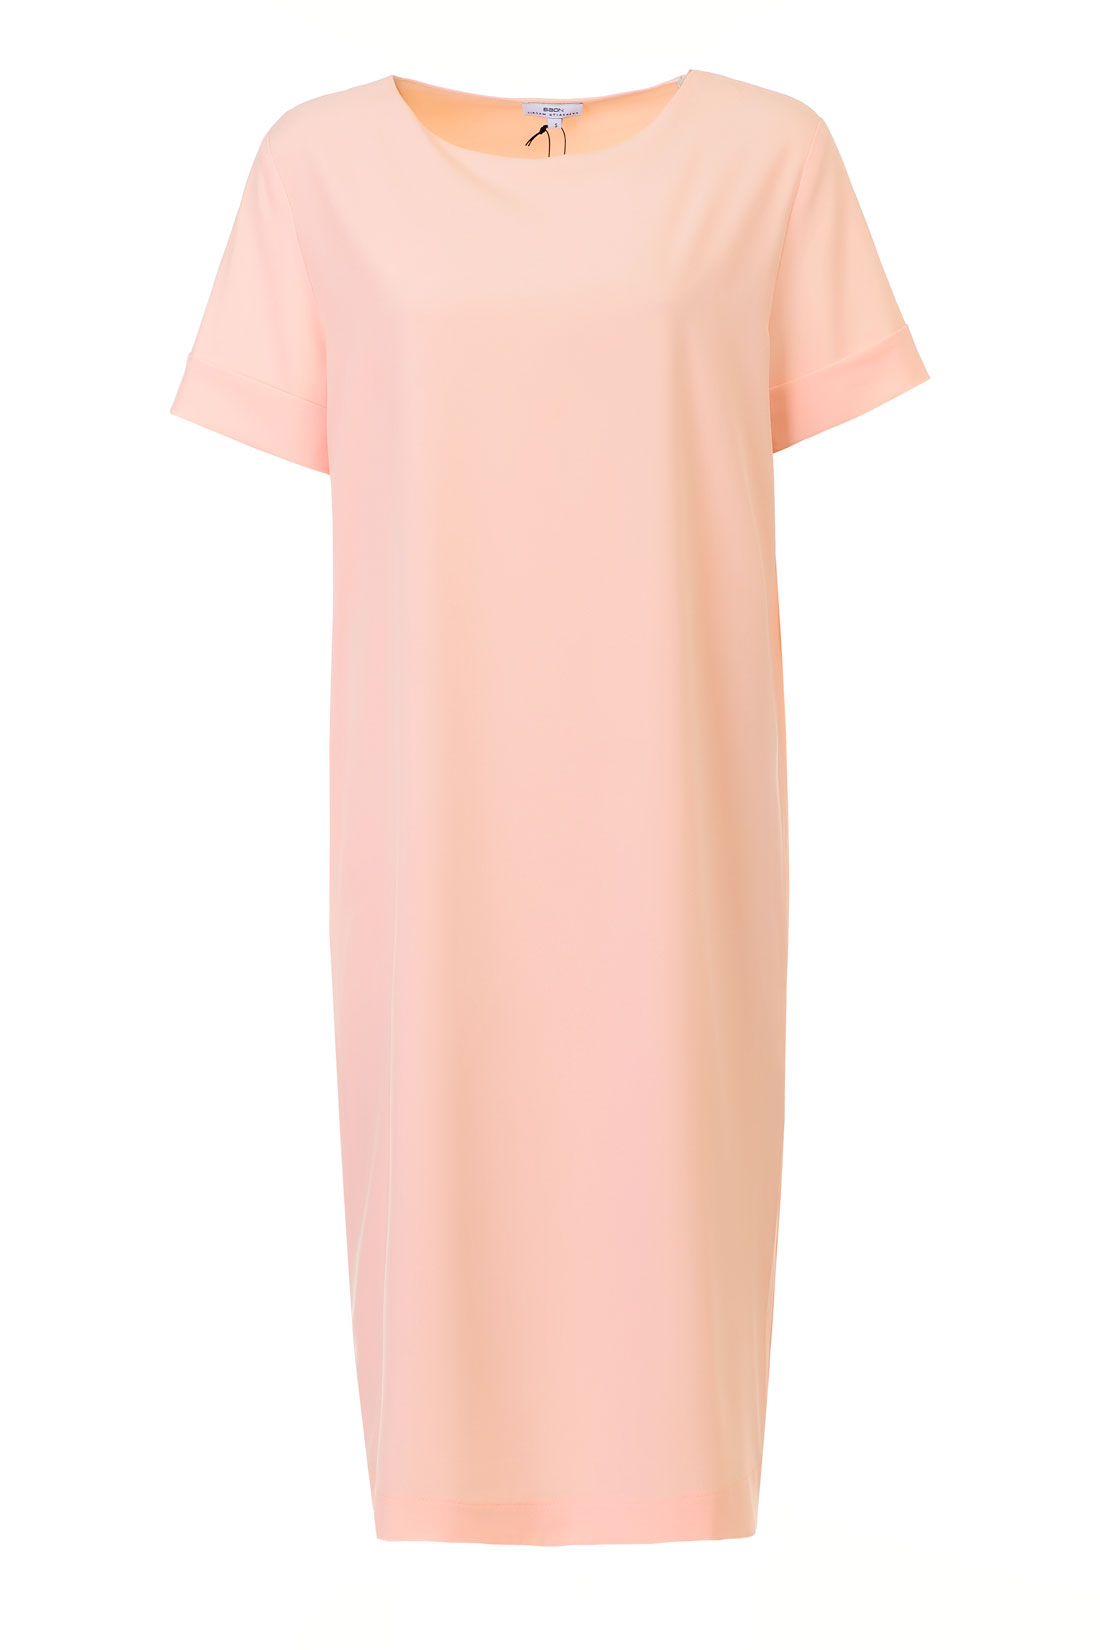 Платье-футболка (арт. baon B457111), размер XS, цвет розовый Платье-футболка (арт. baon B457111) - фото 3